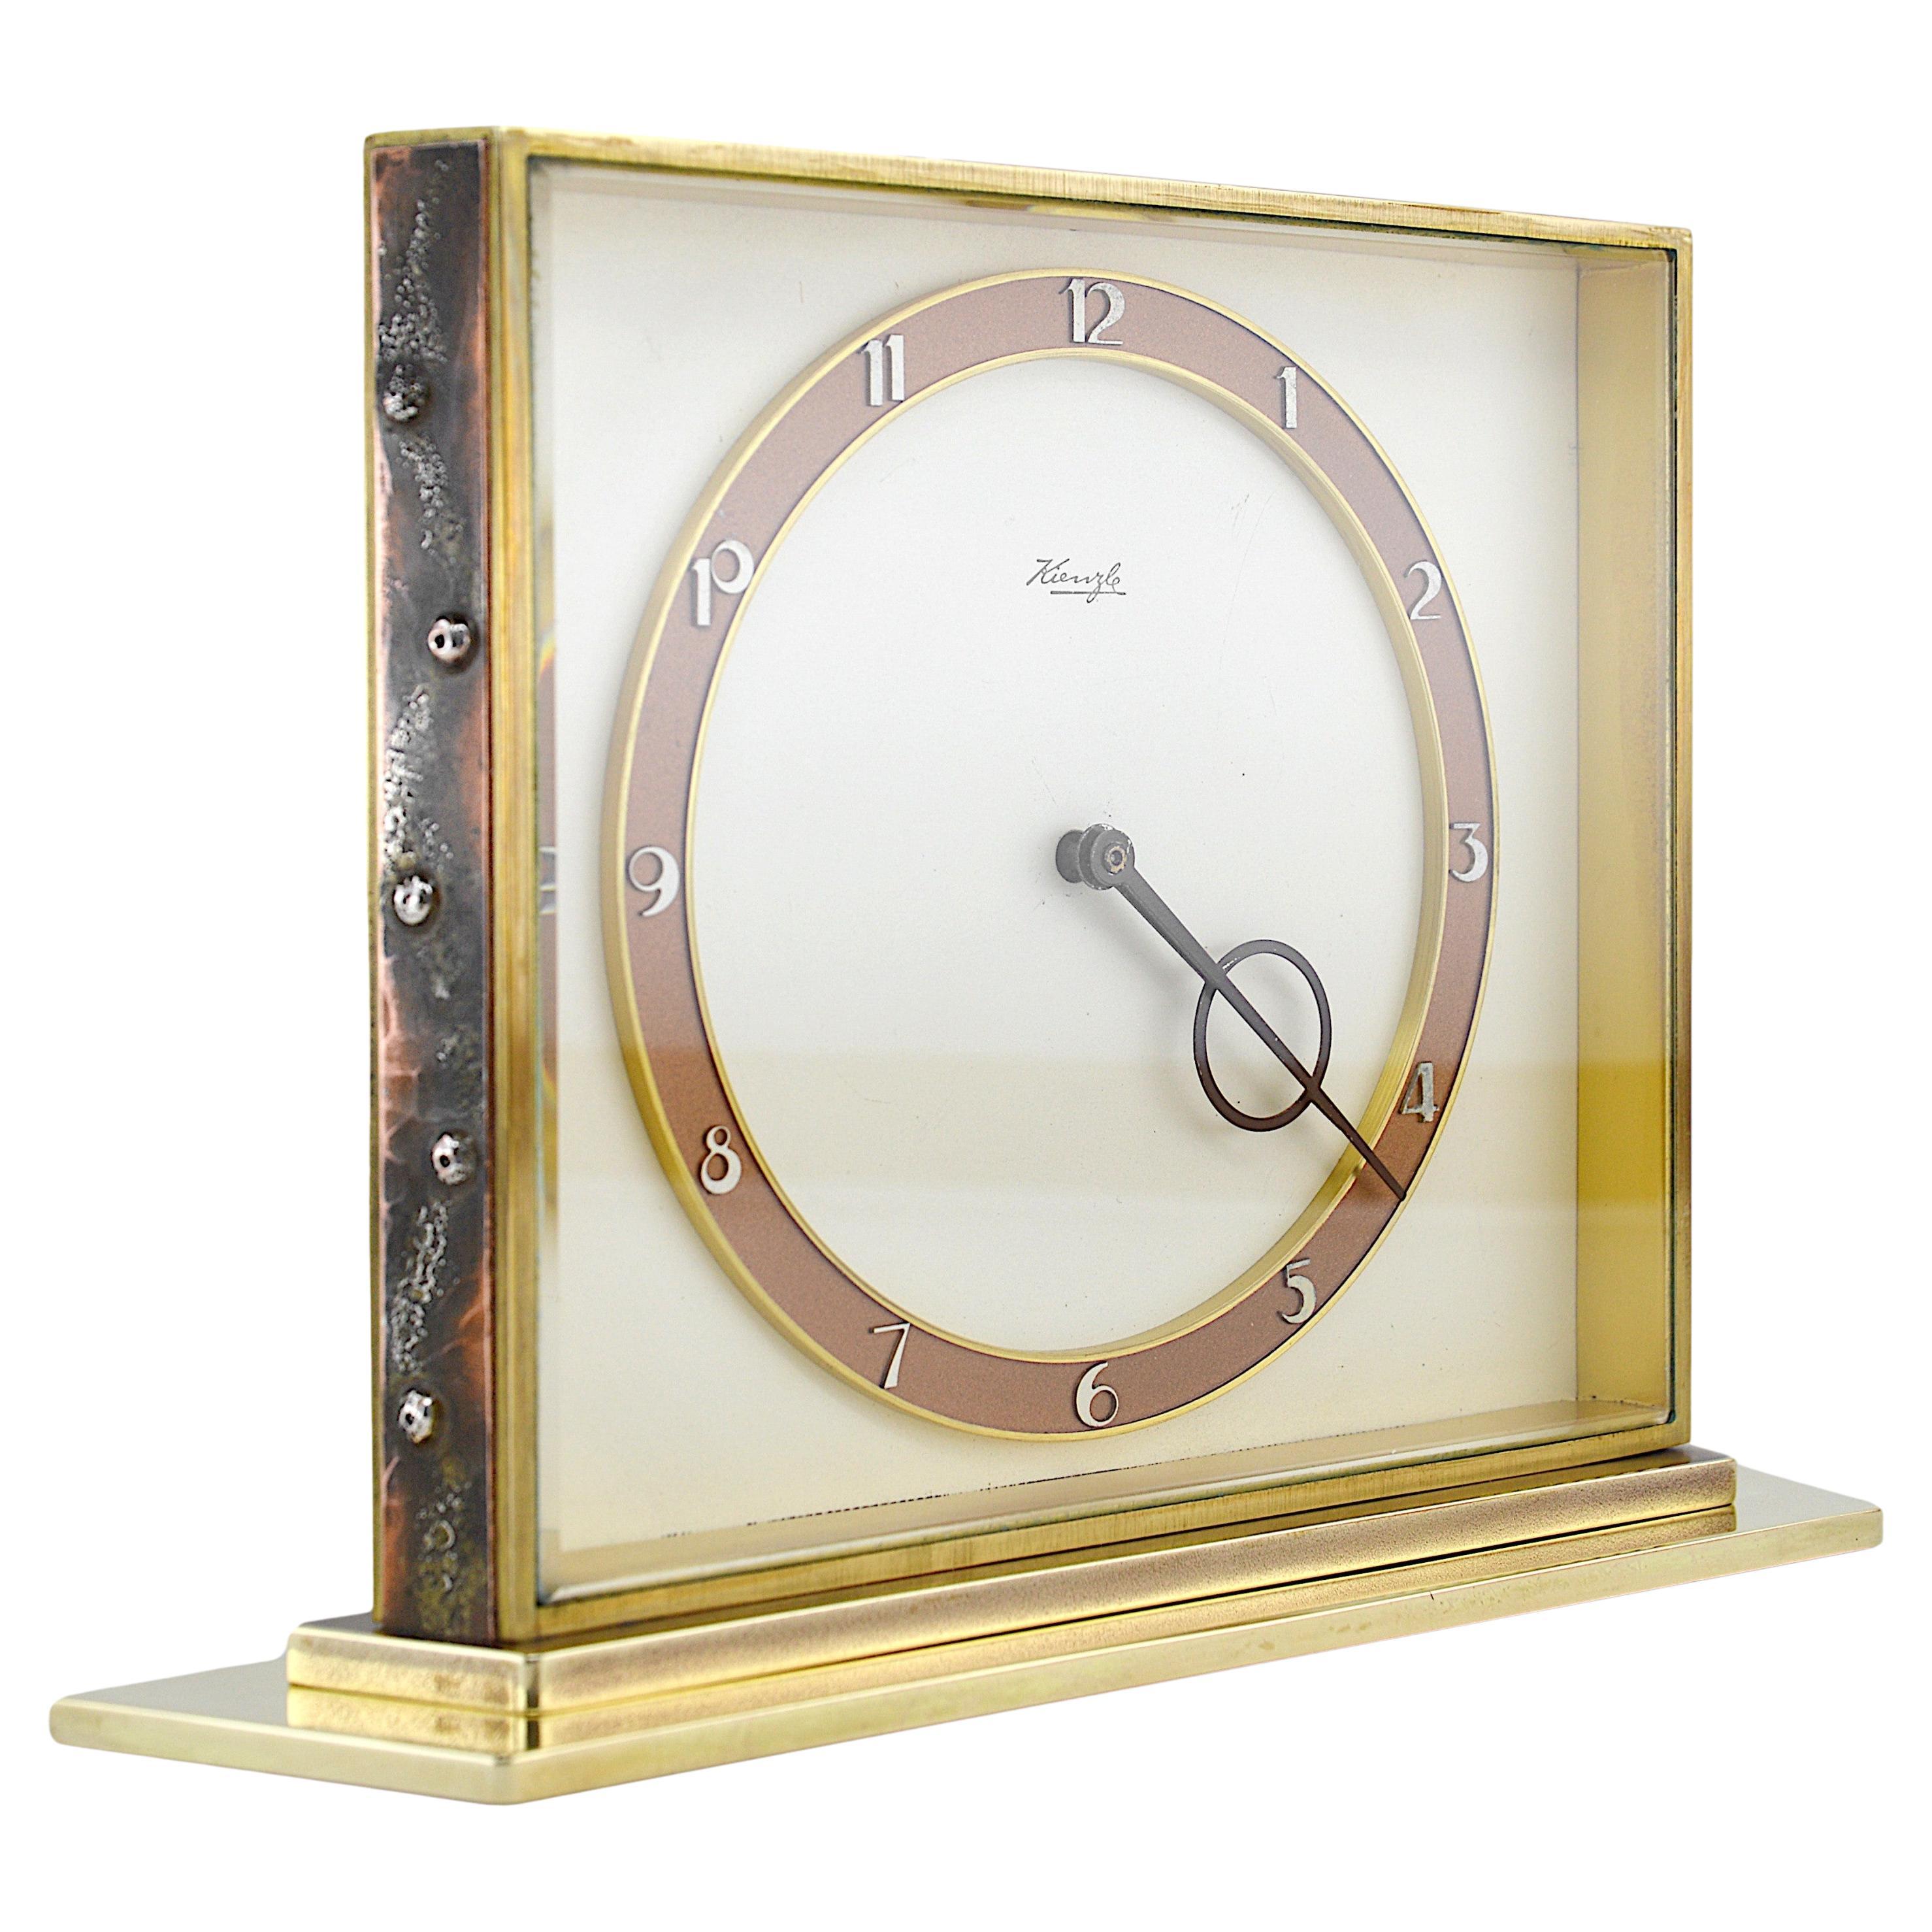 Kienzle German Midcentury Table Clock, 1950s For Sale